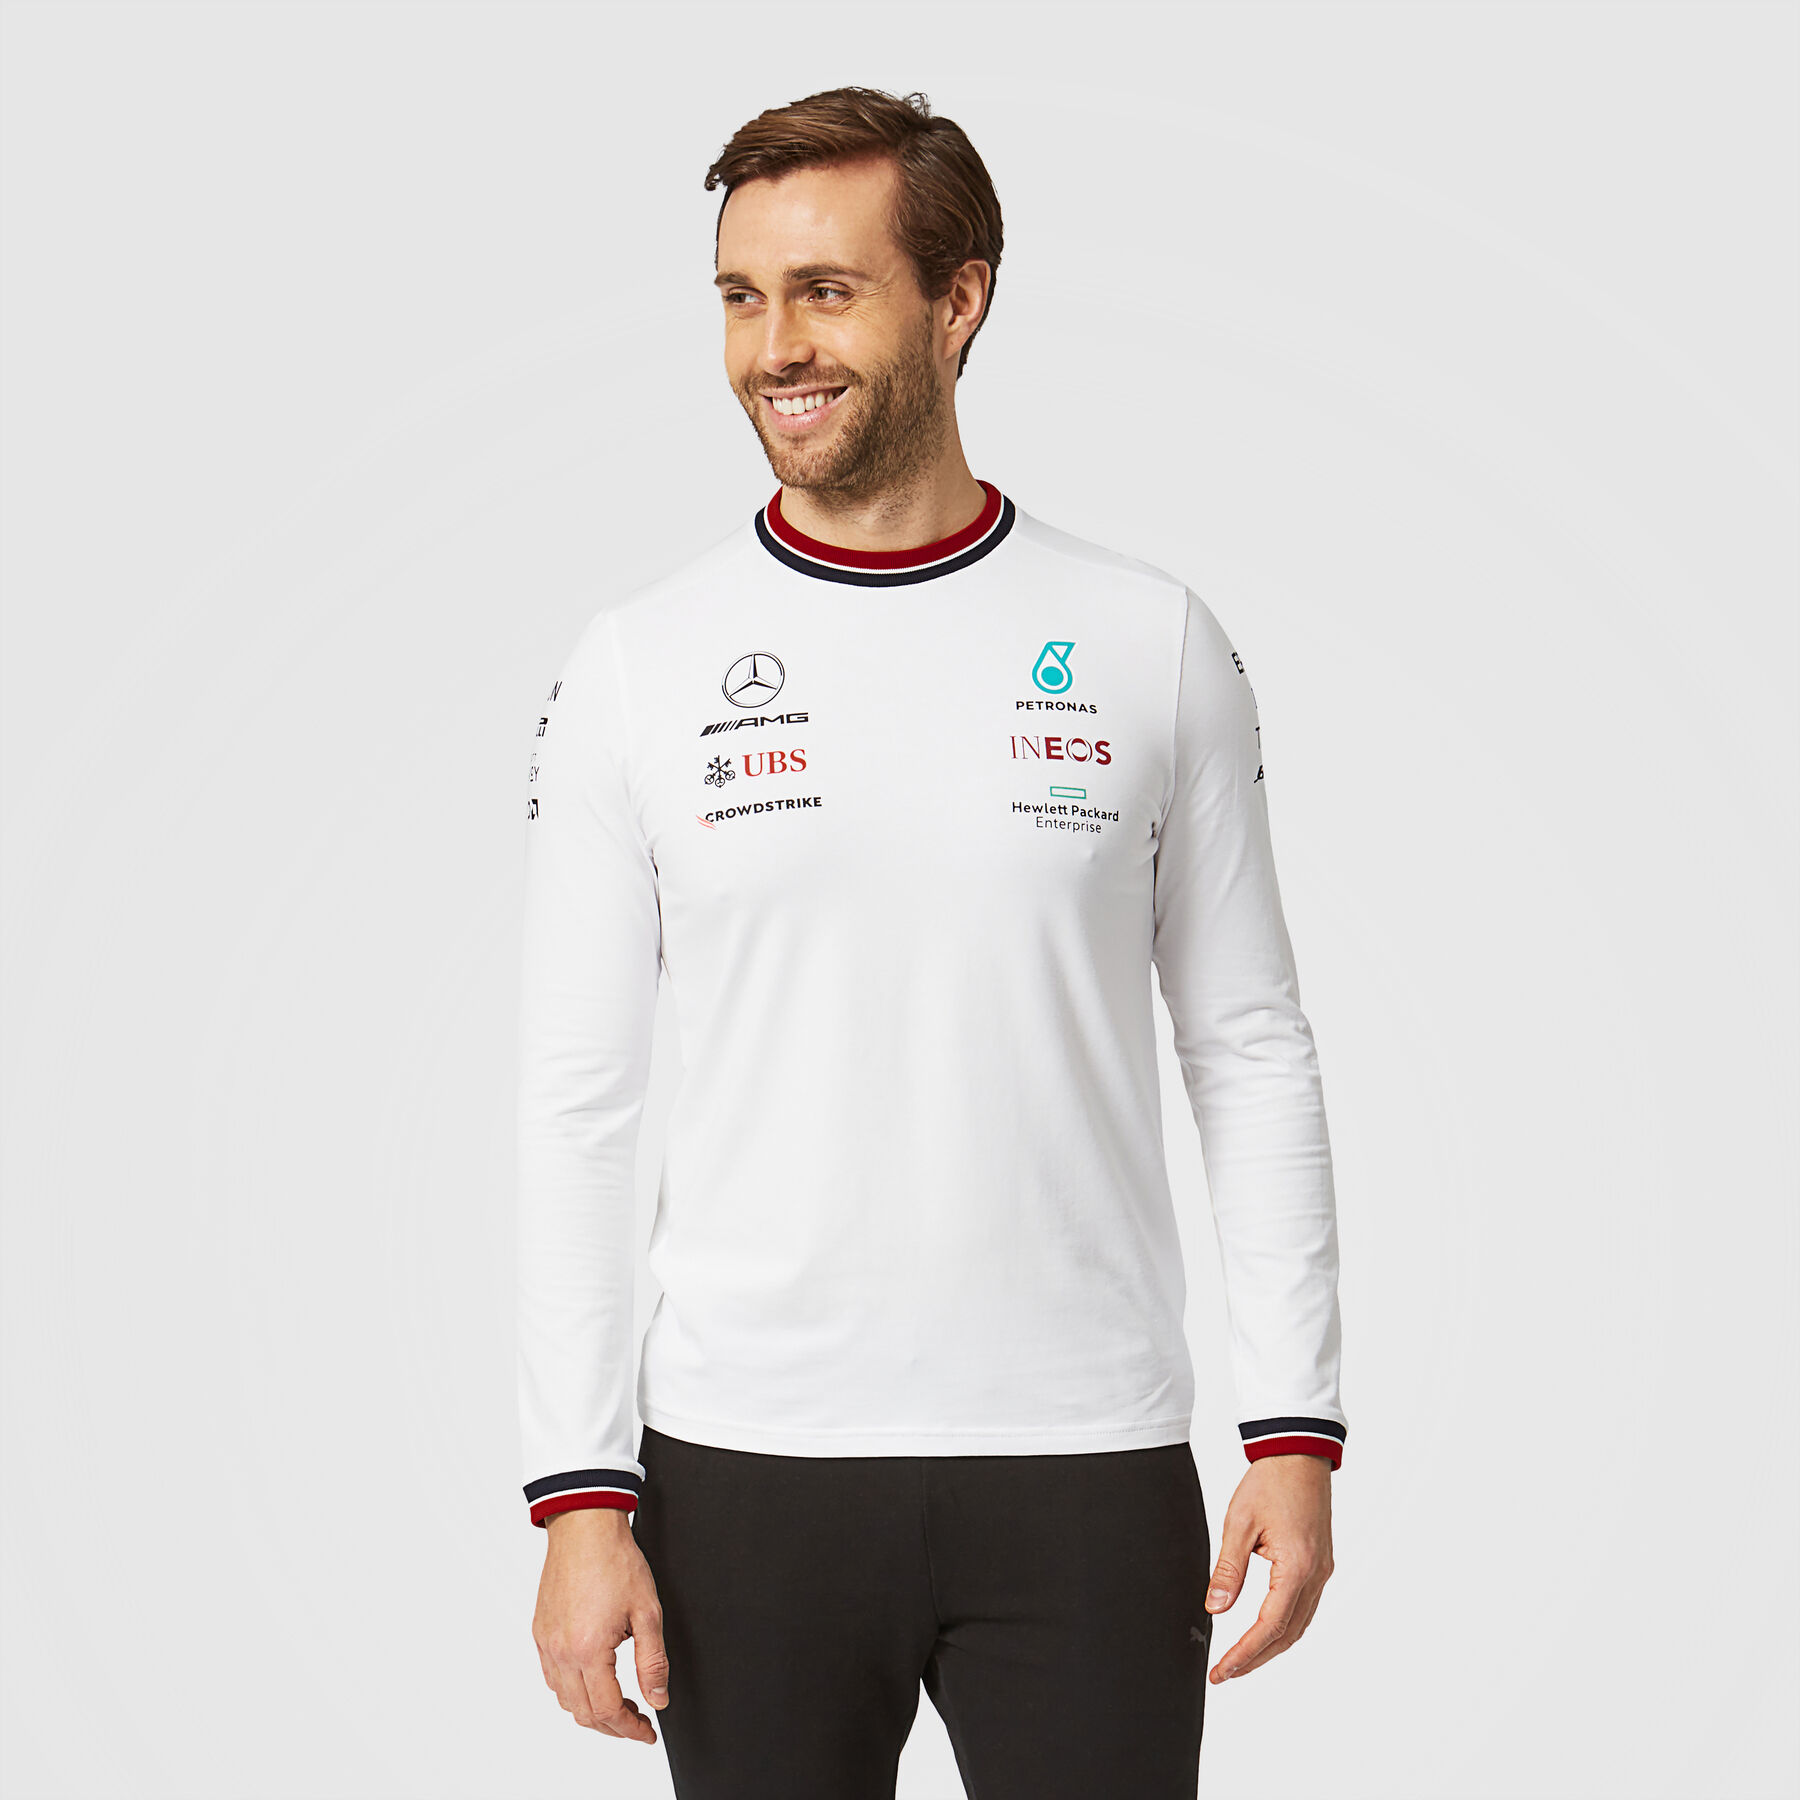 NEW 2019 Mercedes AMG F1 Team Lewis Hamilton Long Sleeve T Shirt Tee Top WHITE 